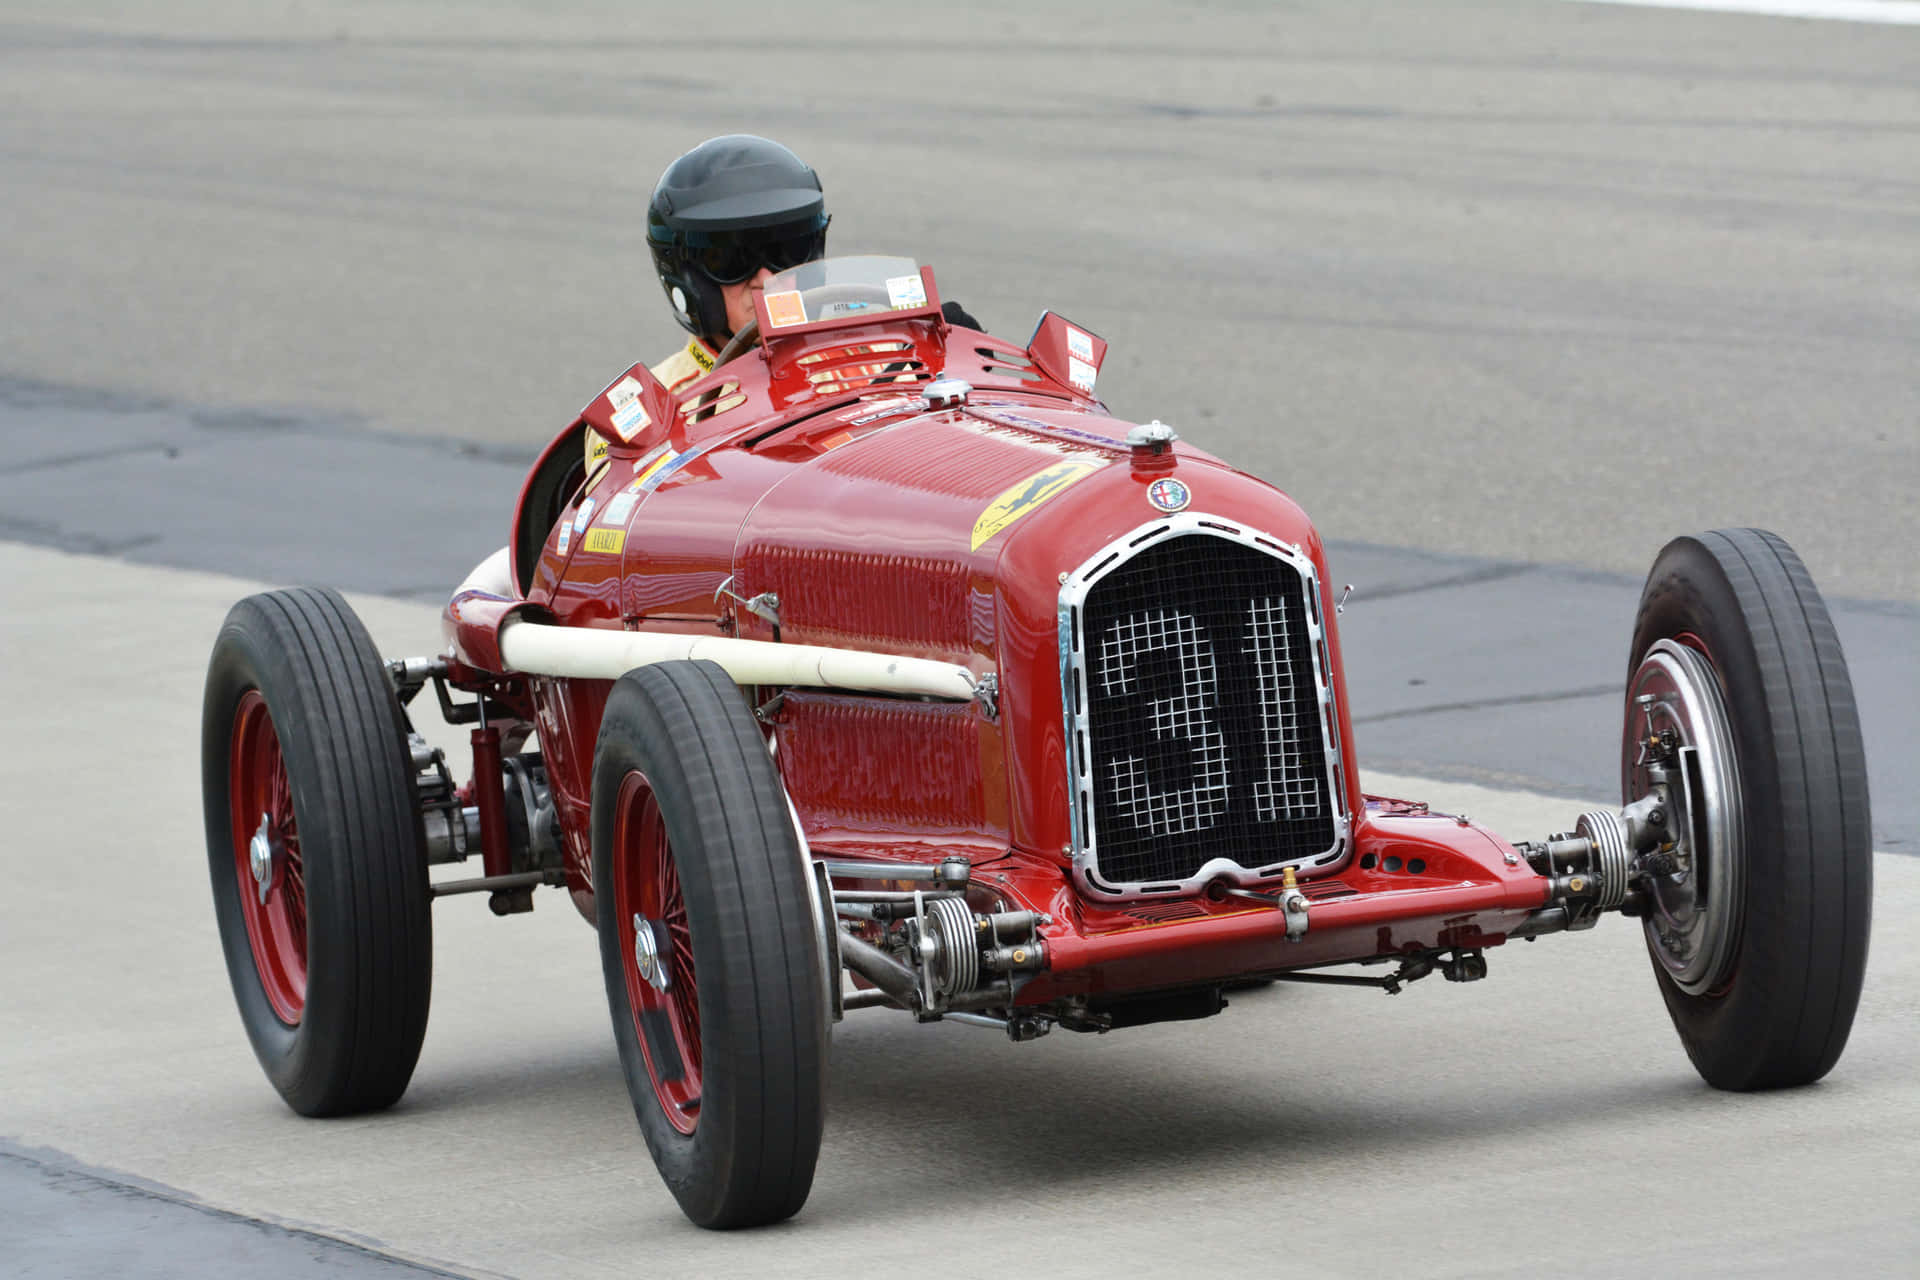 High-speed adrenaline - Car Racing at its finest Wallpaper